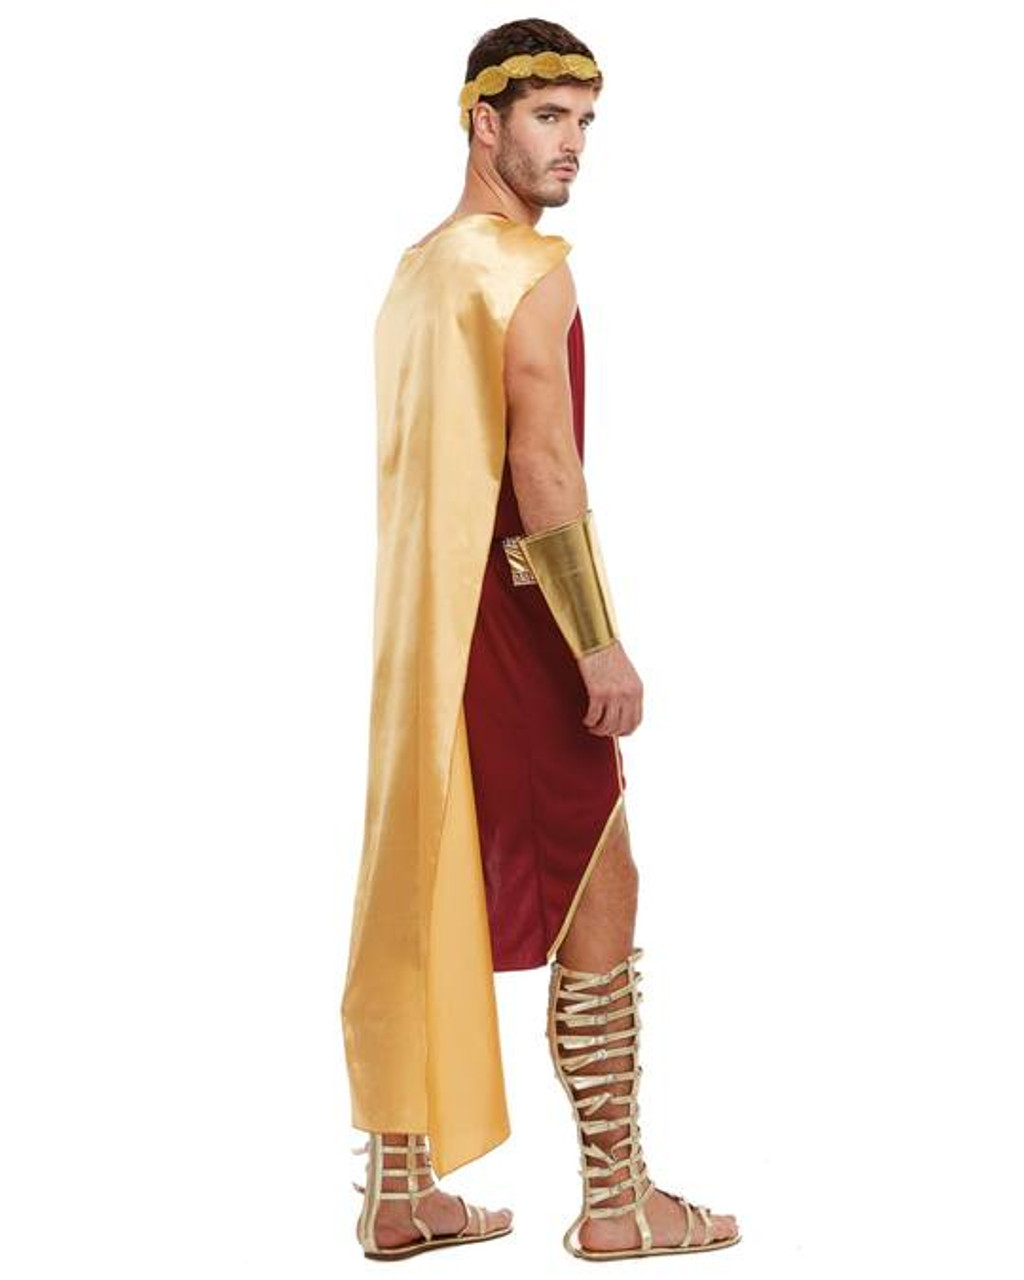 Apollo Men's Costume - Imaginations Costume & Dance